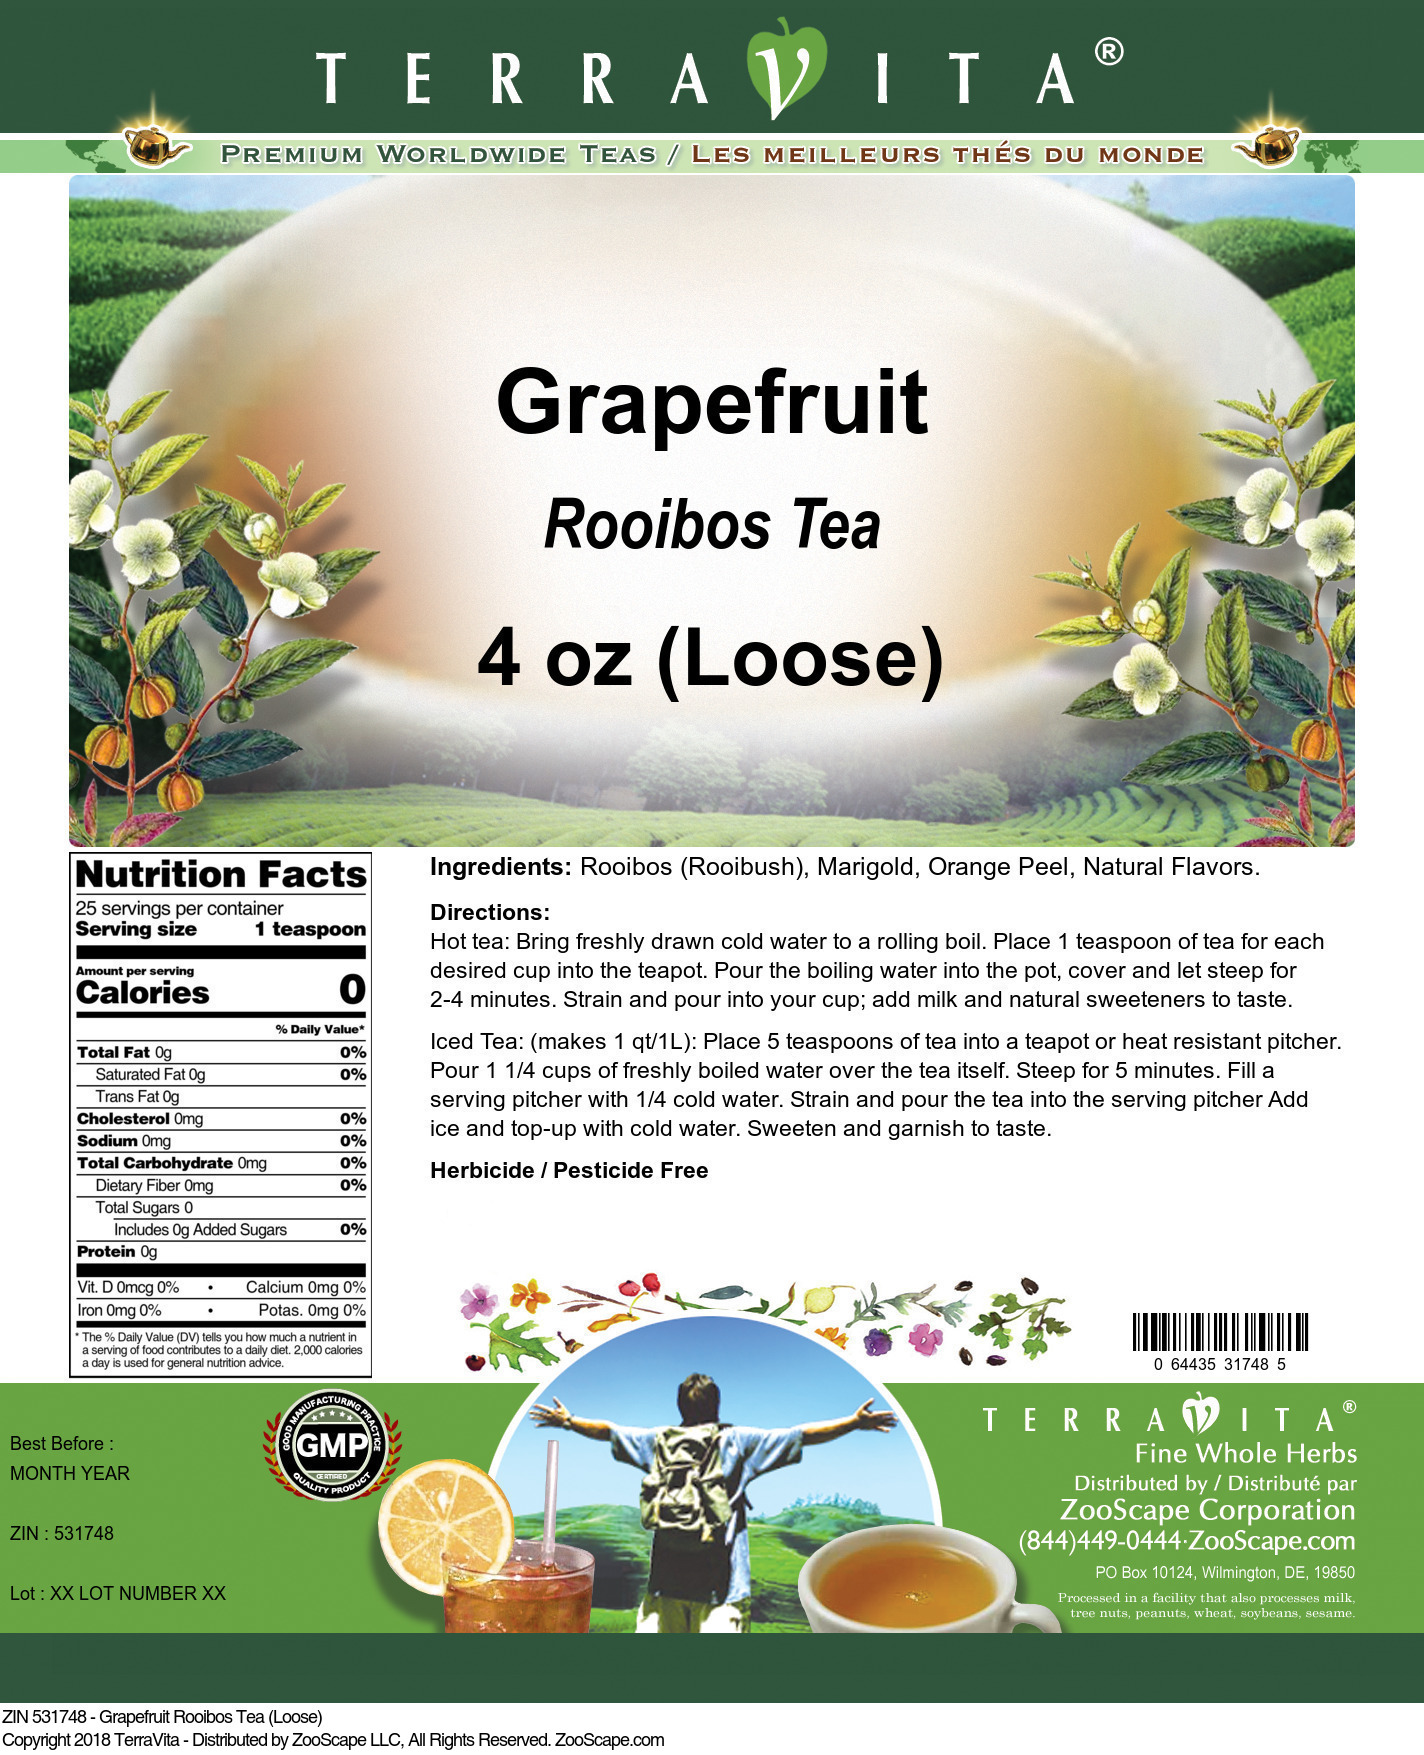 Grapefruit Rooibos Tea (Loose) - Label